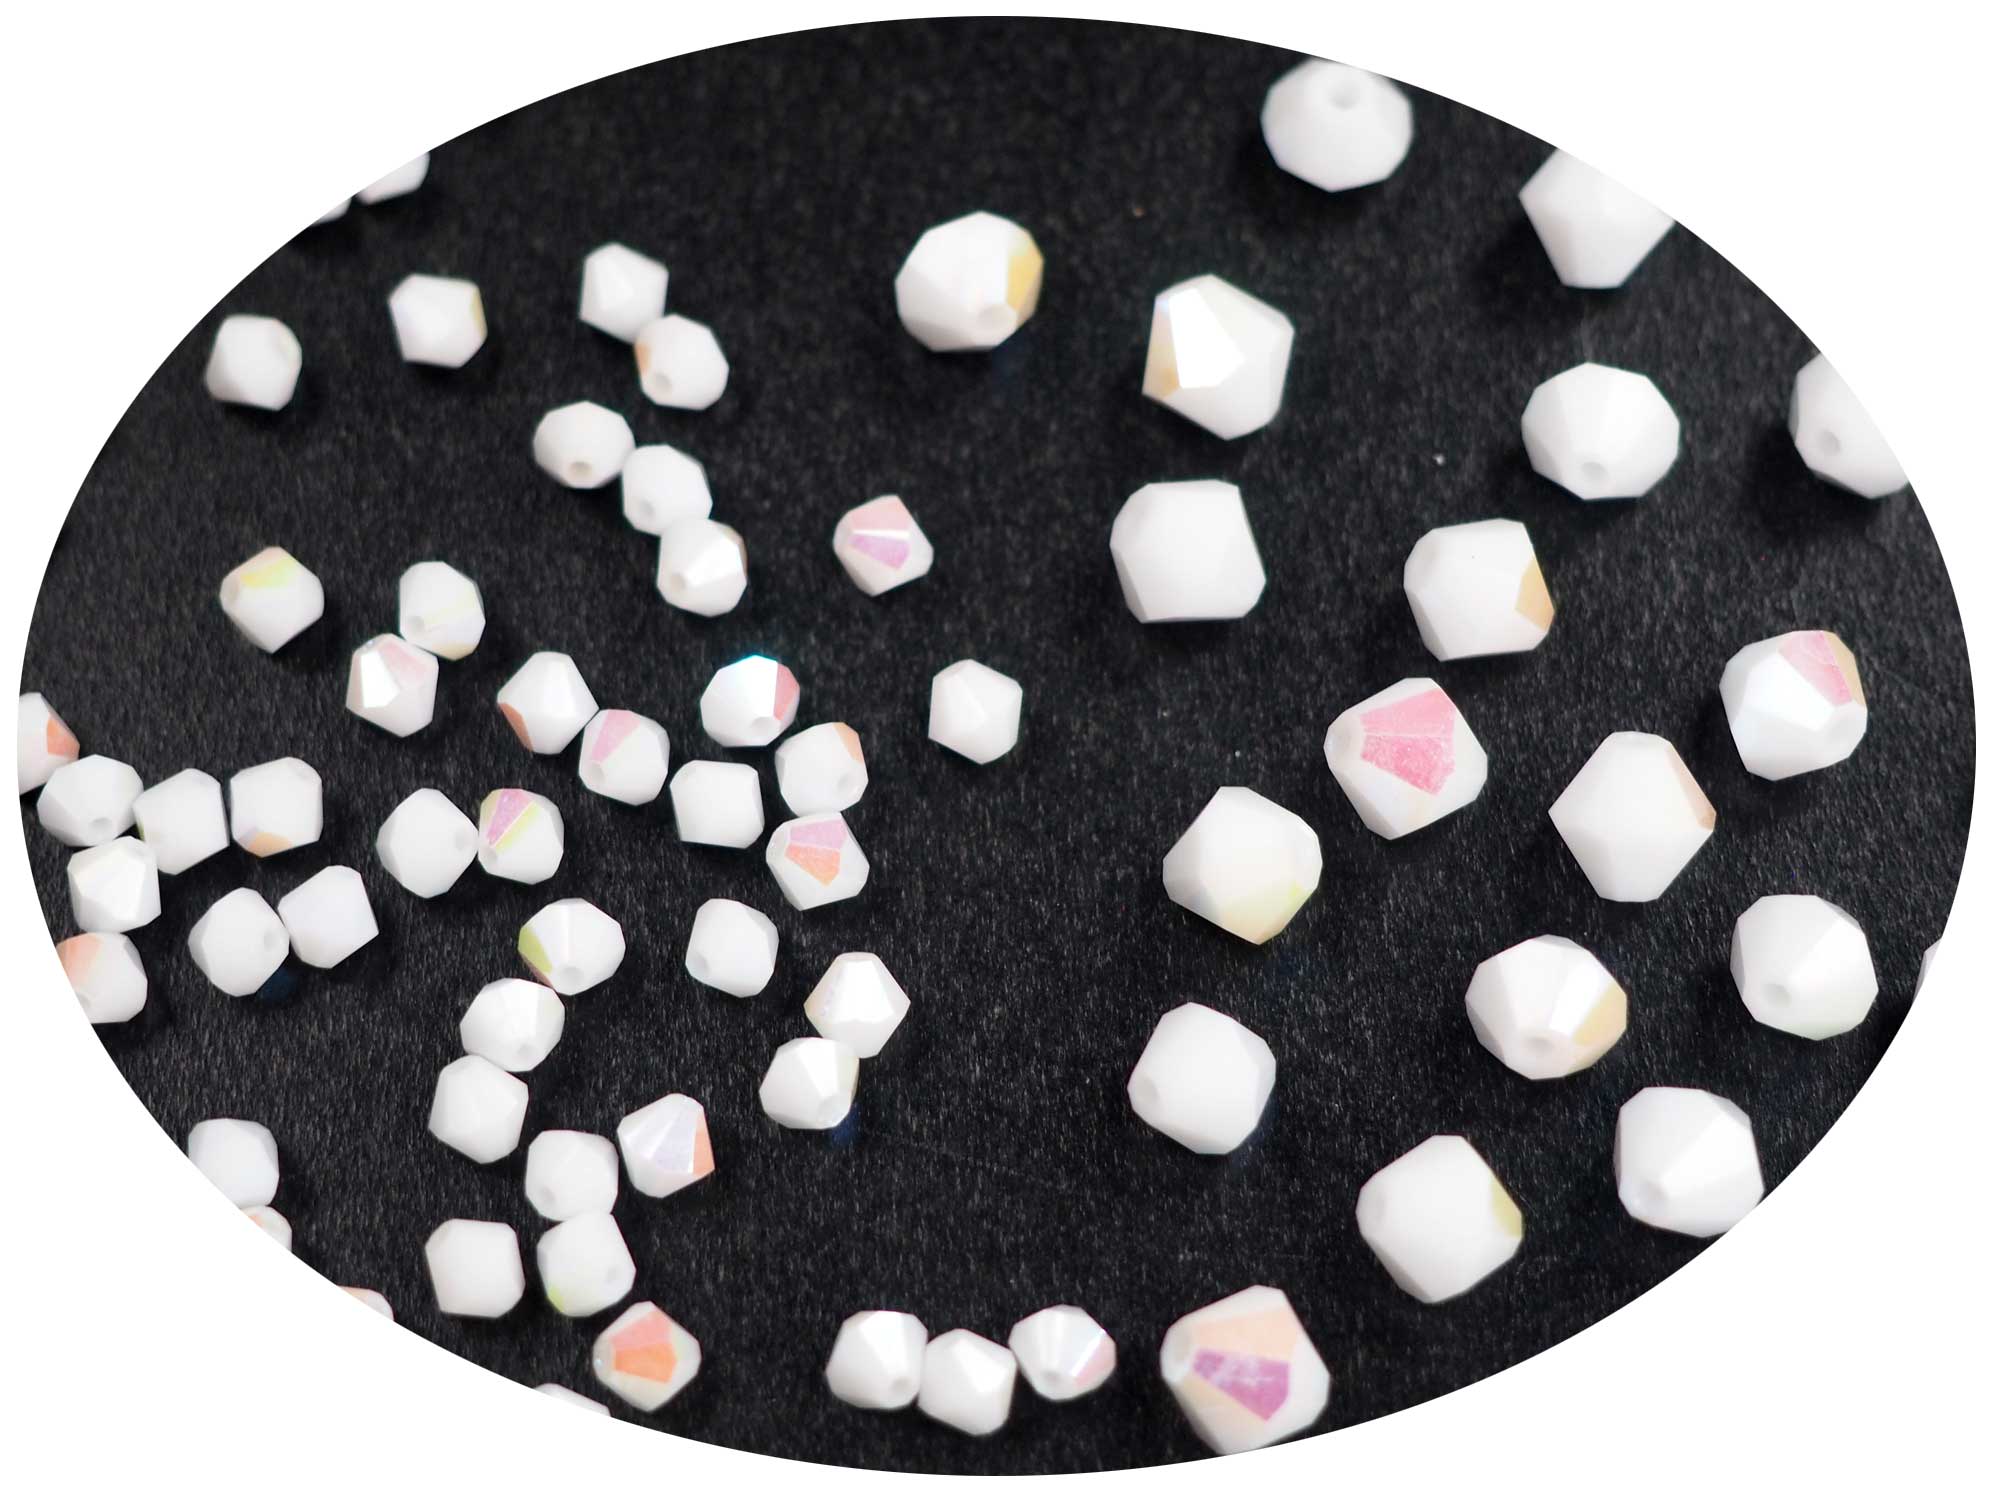 Chalk White AB, Czech Glass Beads, Machine Cut Bicones (MC Rondell, Diamond Shape), opaque chalkwhite crystals coated with Aurora Borealis